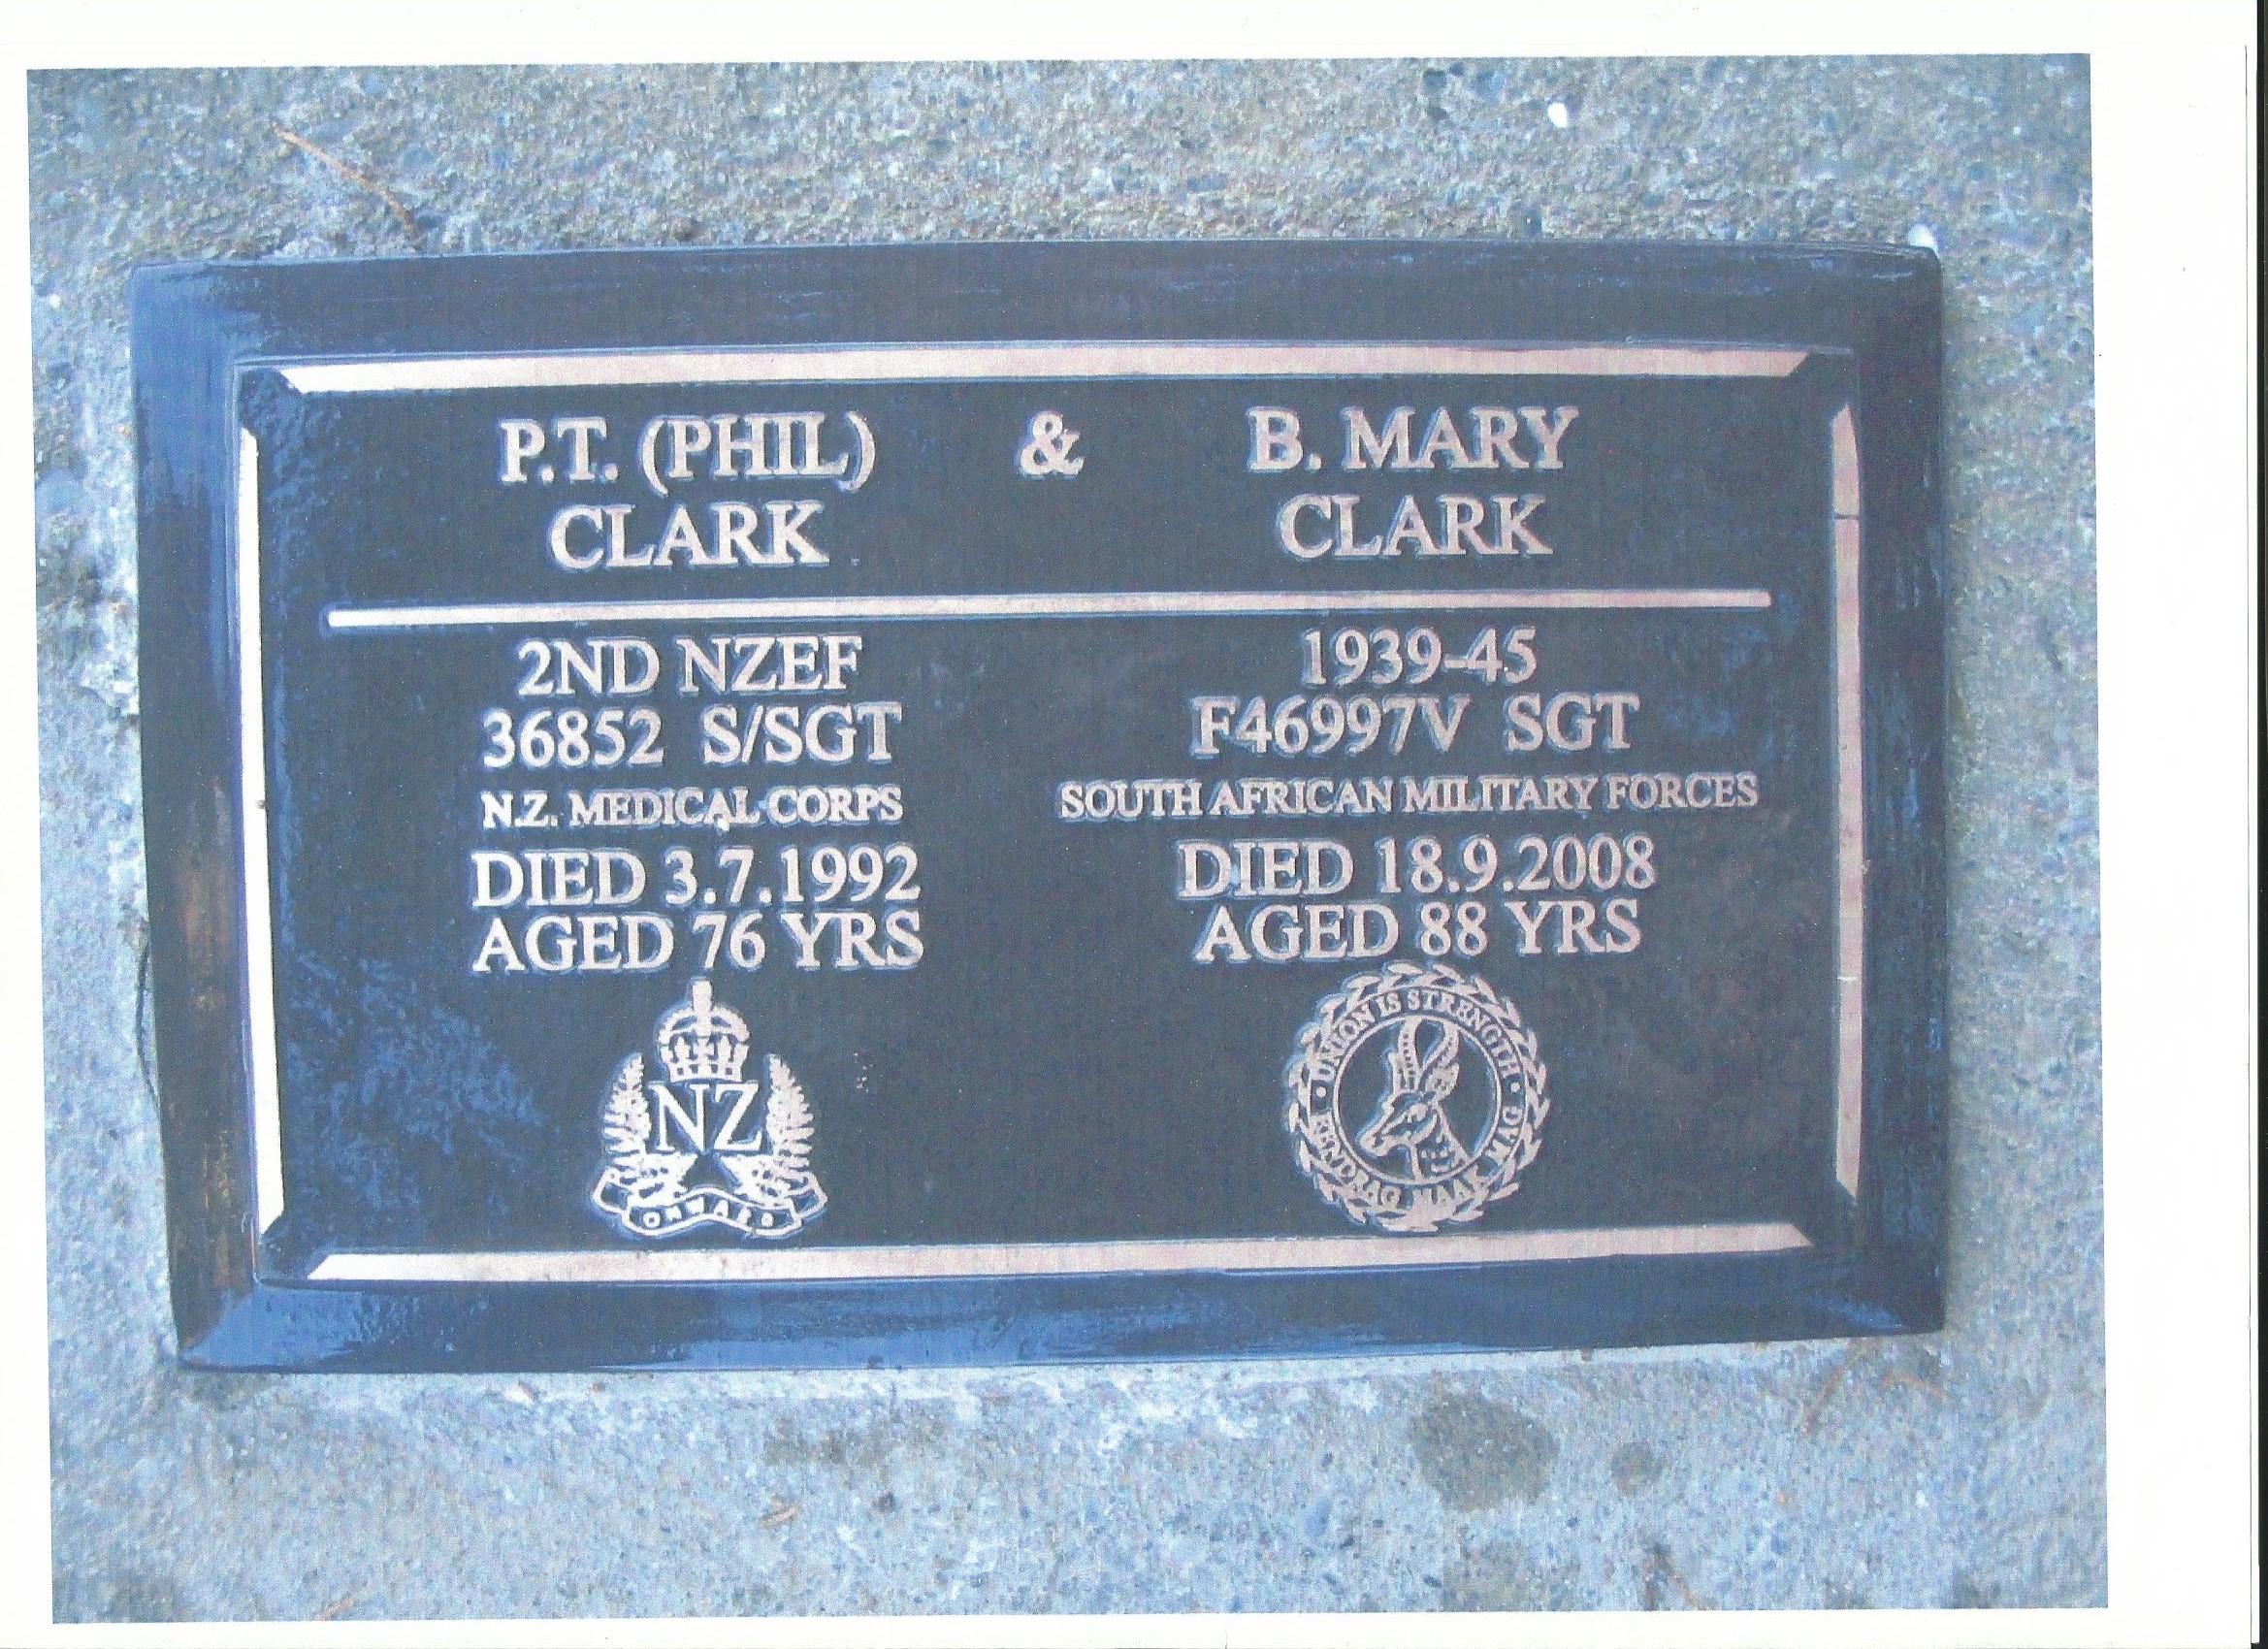 P.T. (Phil) Clark and B. Mary Clark memorial